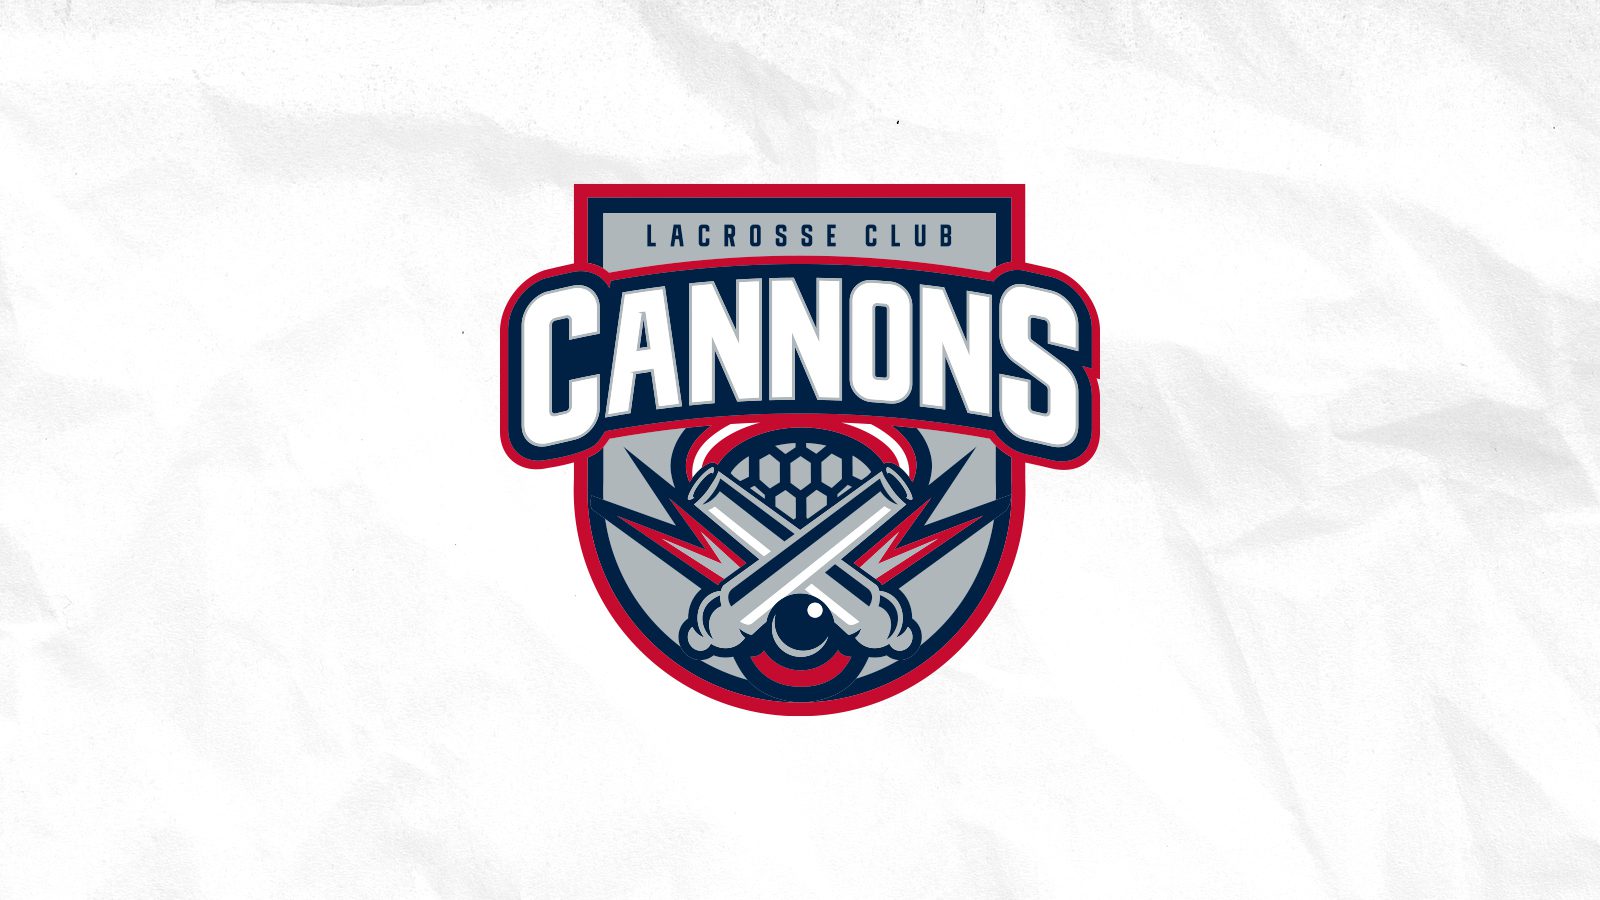 Boston-based Major League Lacrosse merging with Premier Lacrosse